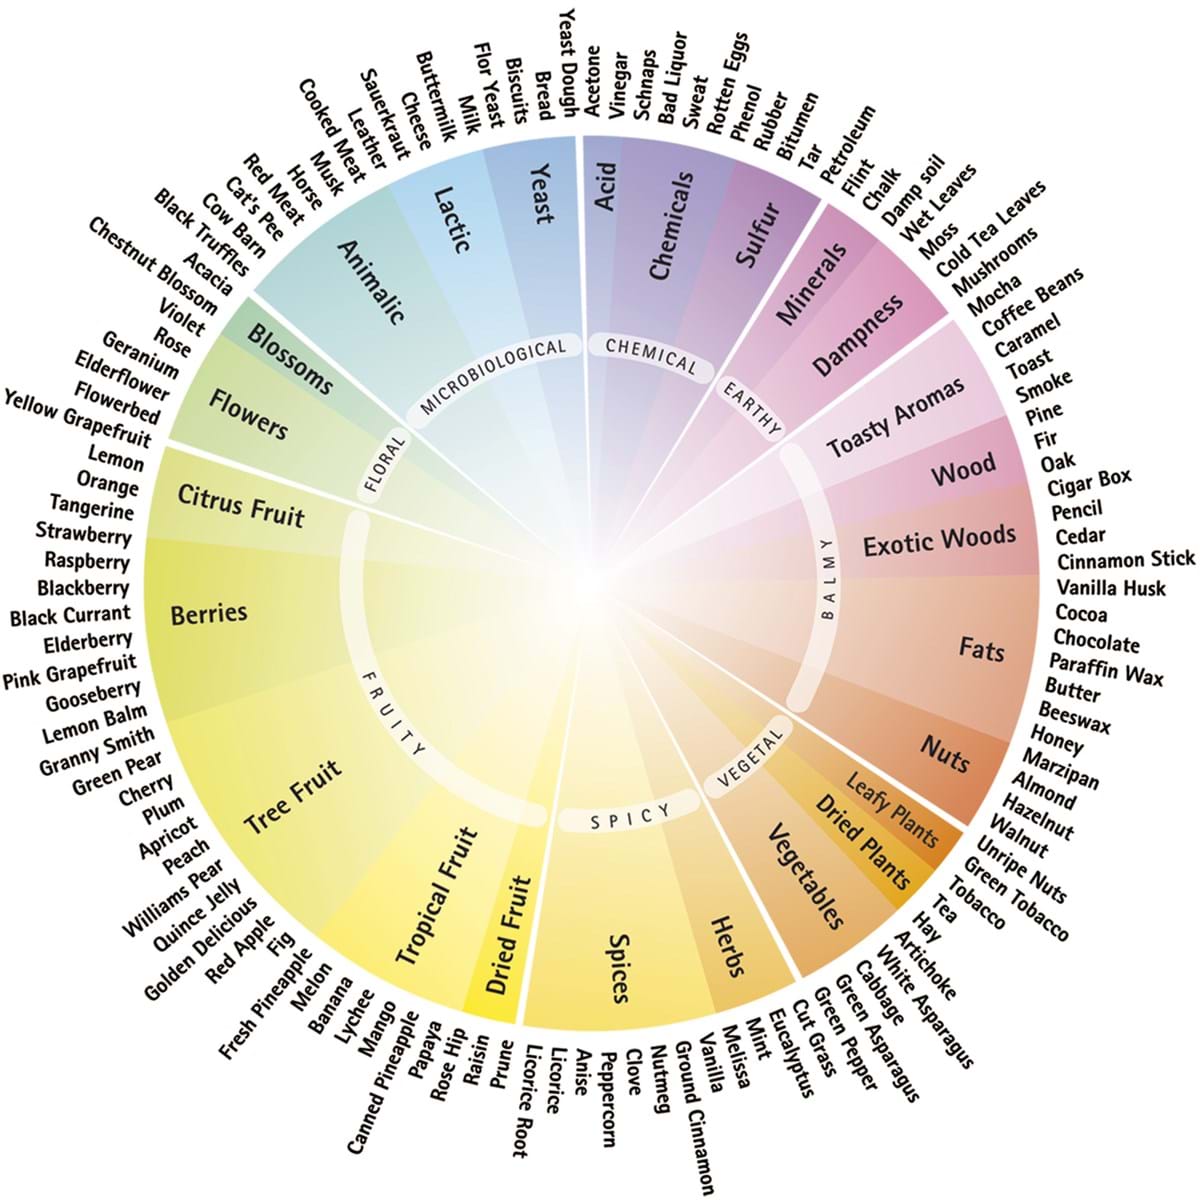 Riedel Wheel Of Aromas